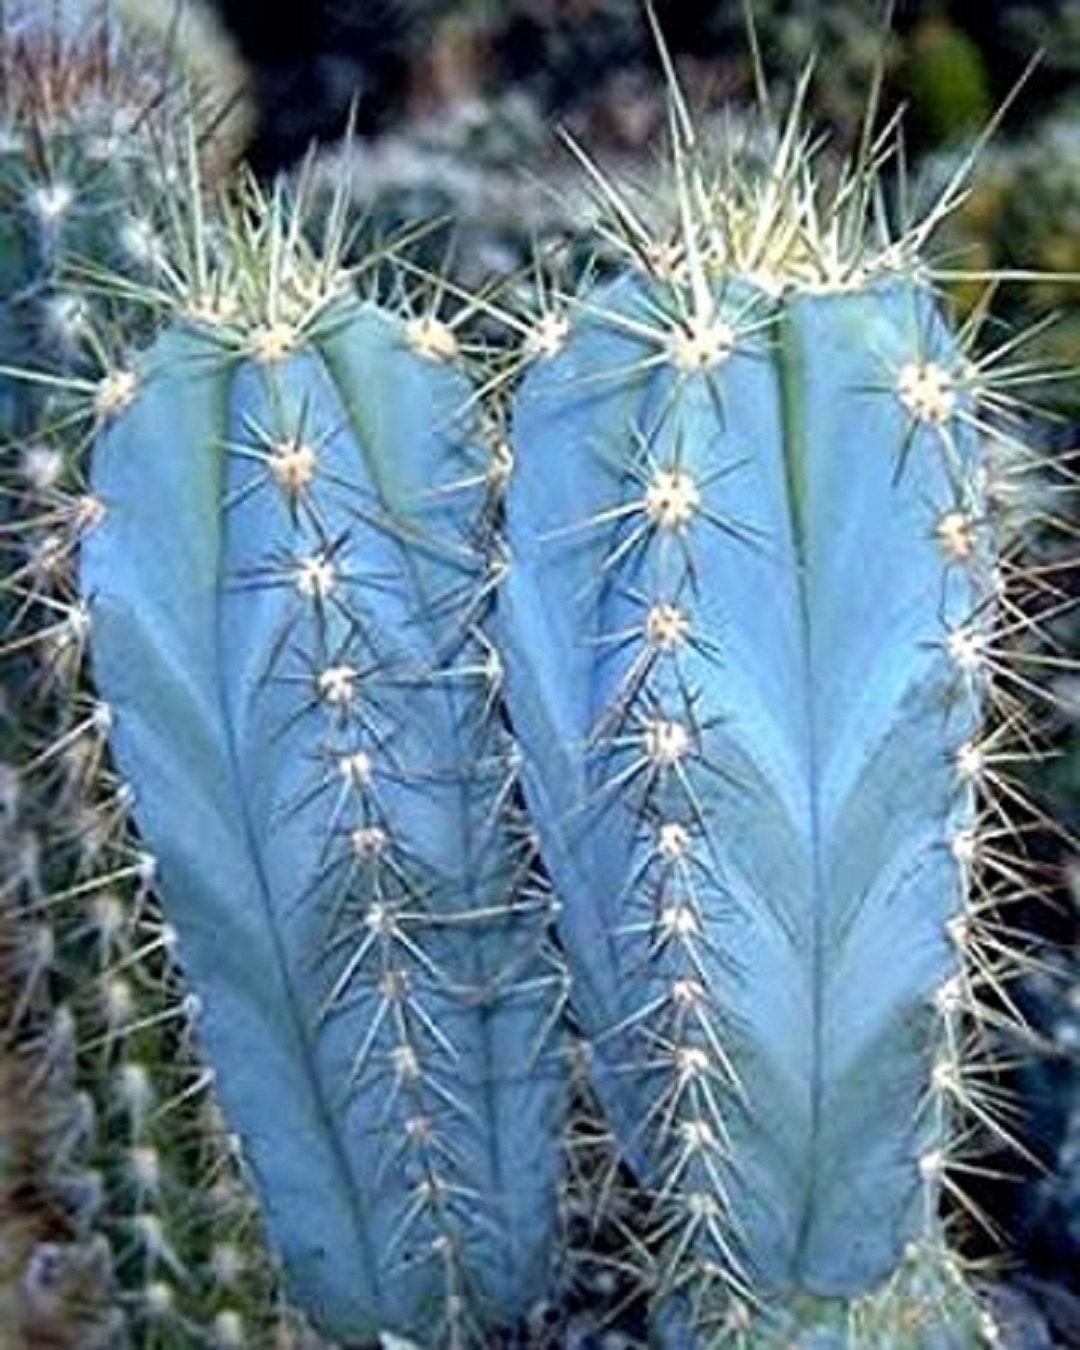 Pilosocereus Magnificus * Amazing Blue Sky Cactus * Rare * 5 Seeds * Limited *